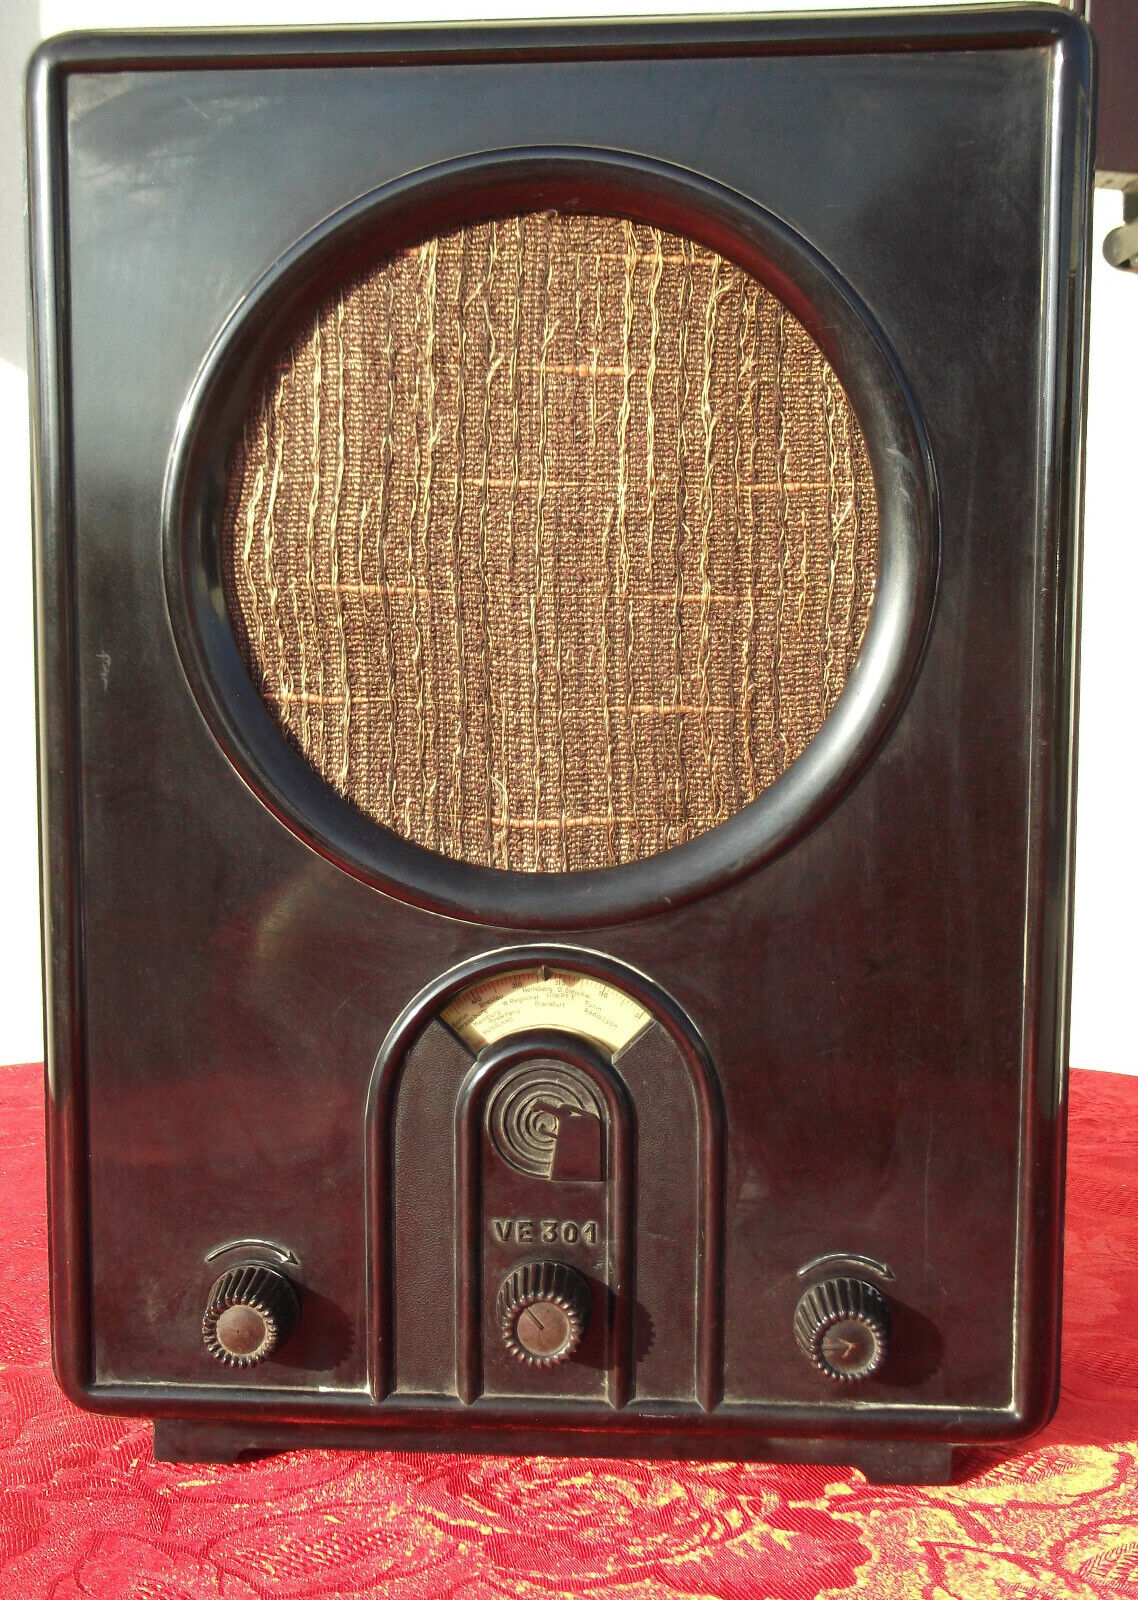 VE 301 RADIO VOLKSEMPFÄNGER GW WWII GERMAN RECEIVER TELEFUNKEN WW2 ve301 dyn 30s